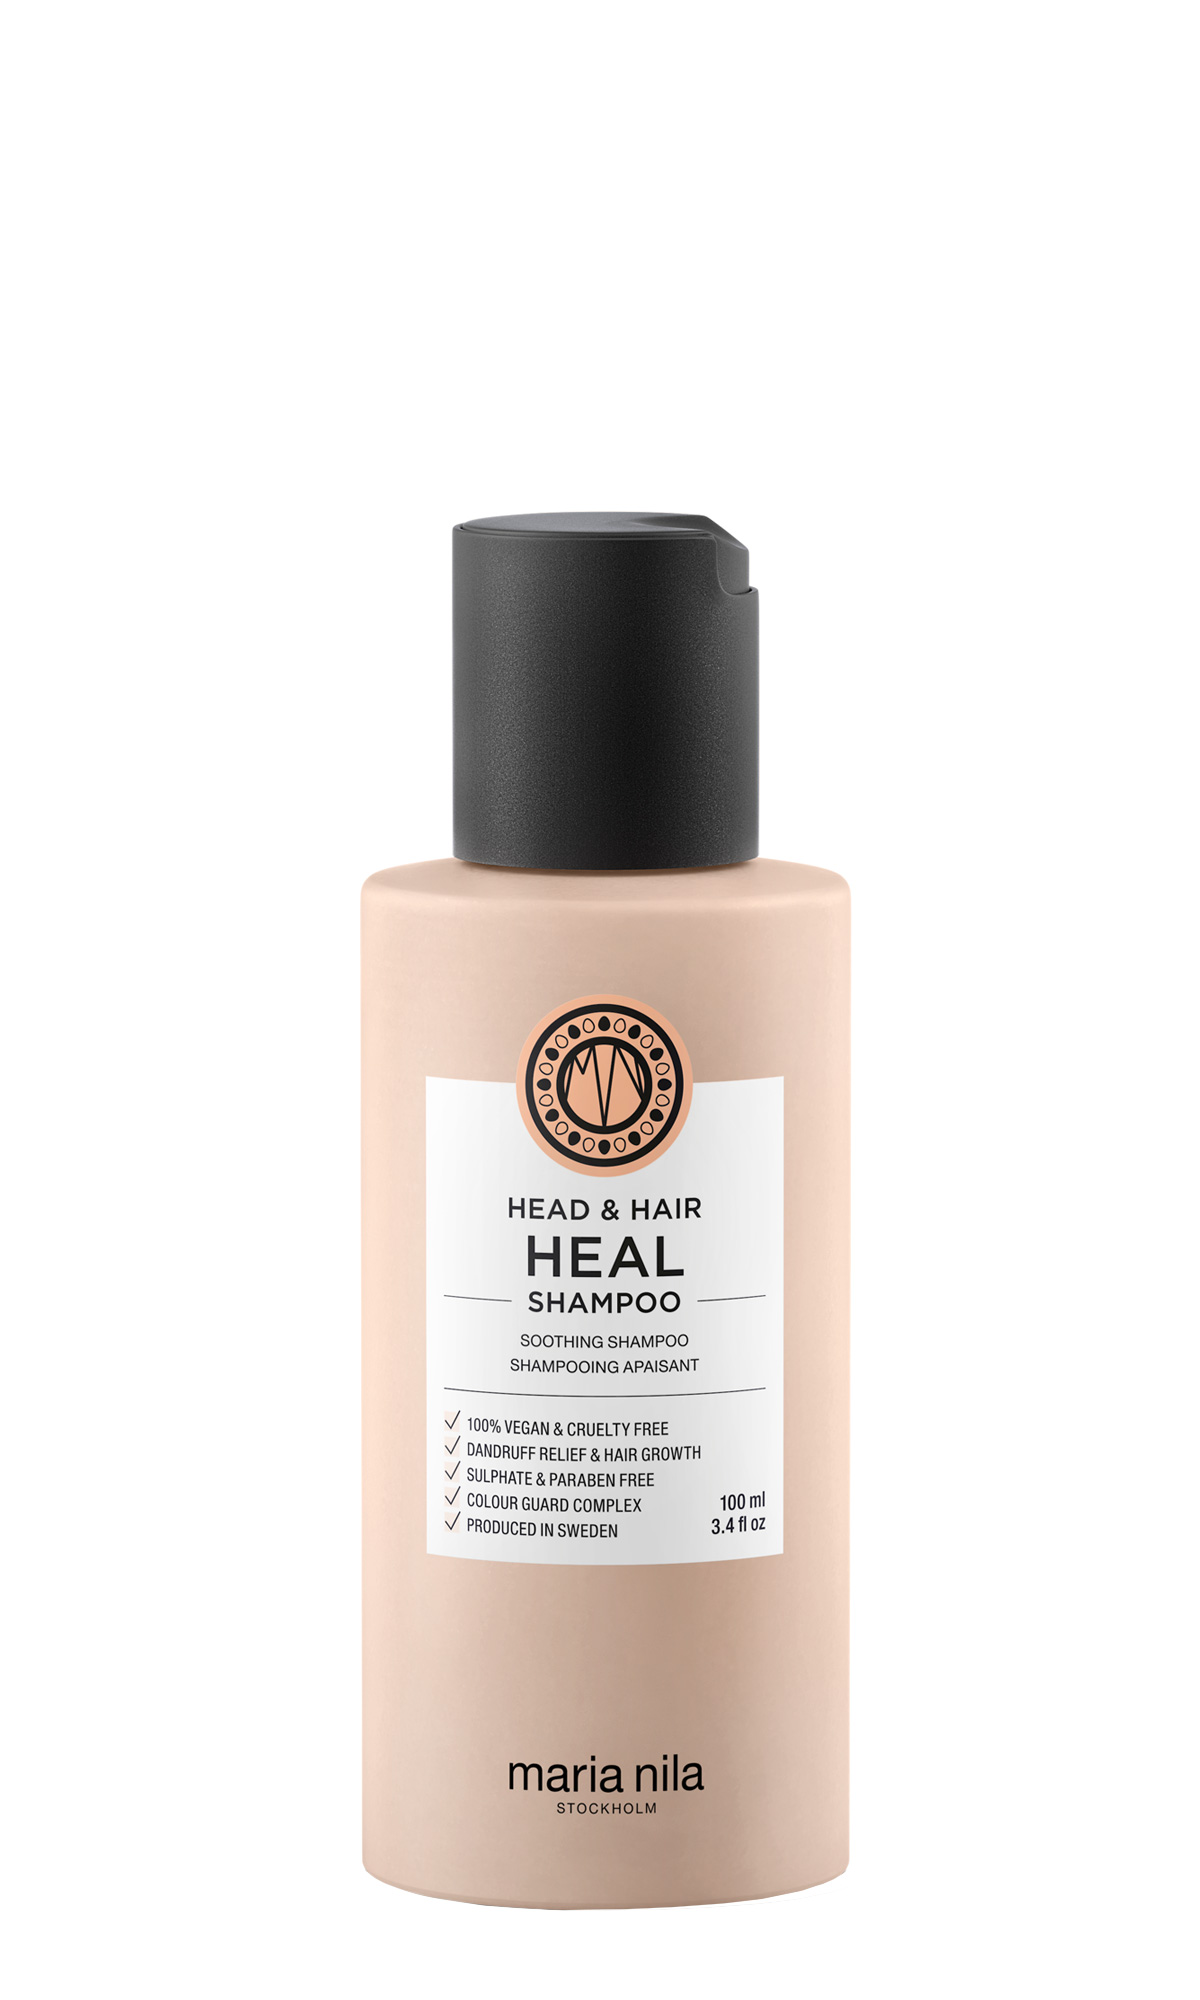 Nila Head & Hair Heal Shampoo - Nicehair.com